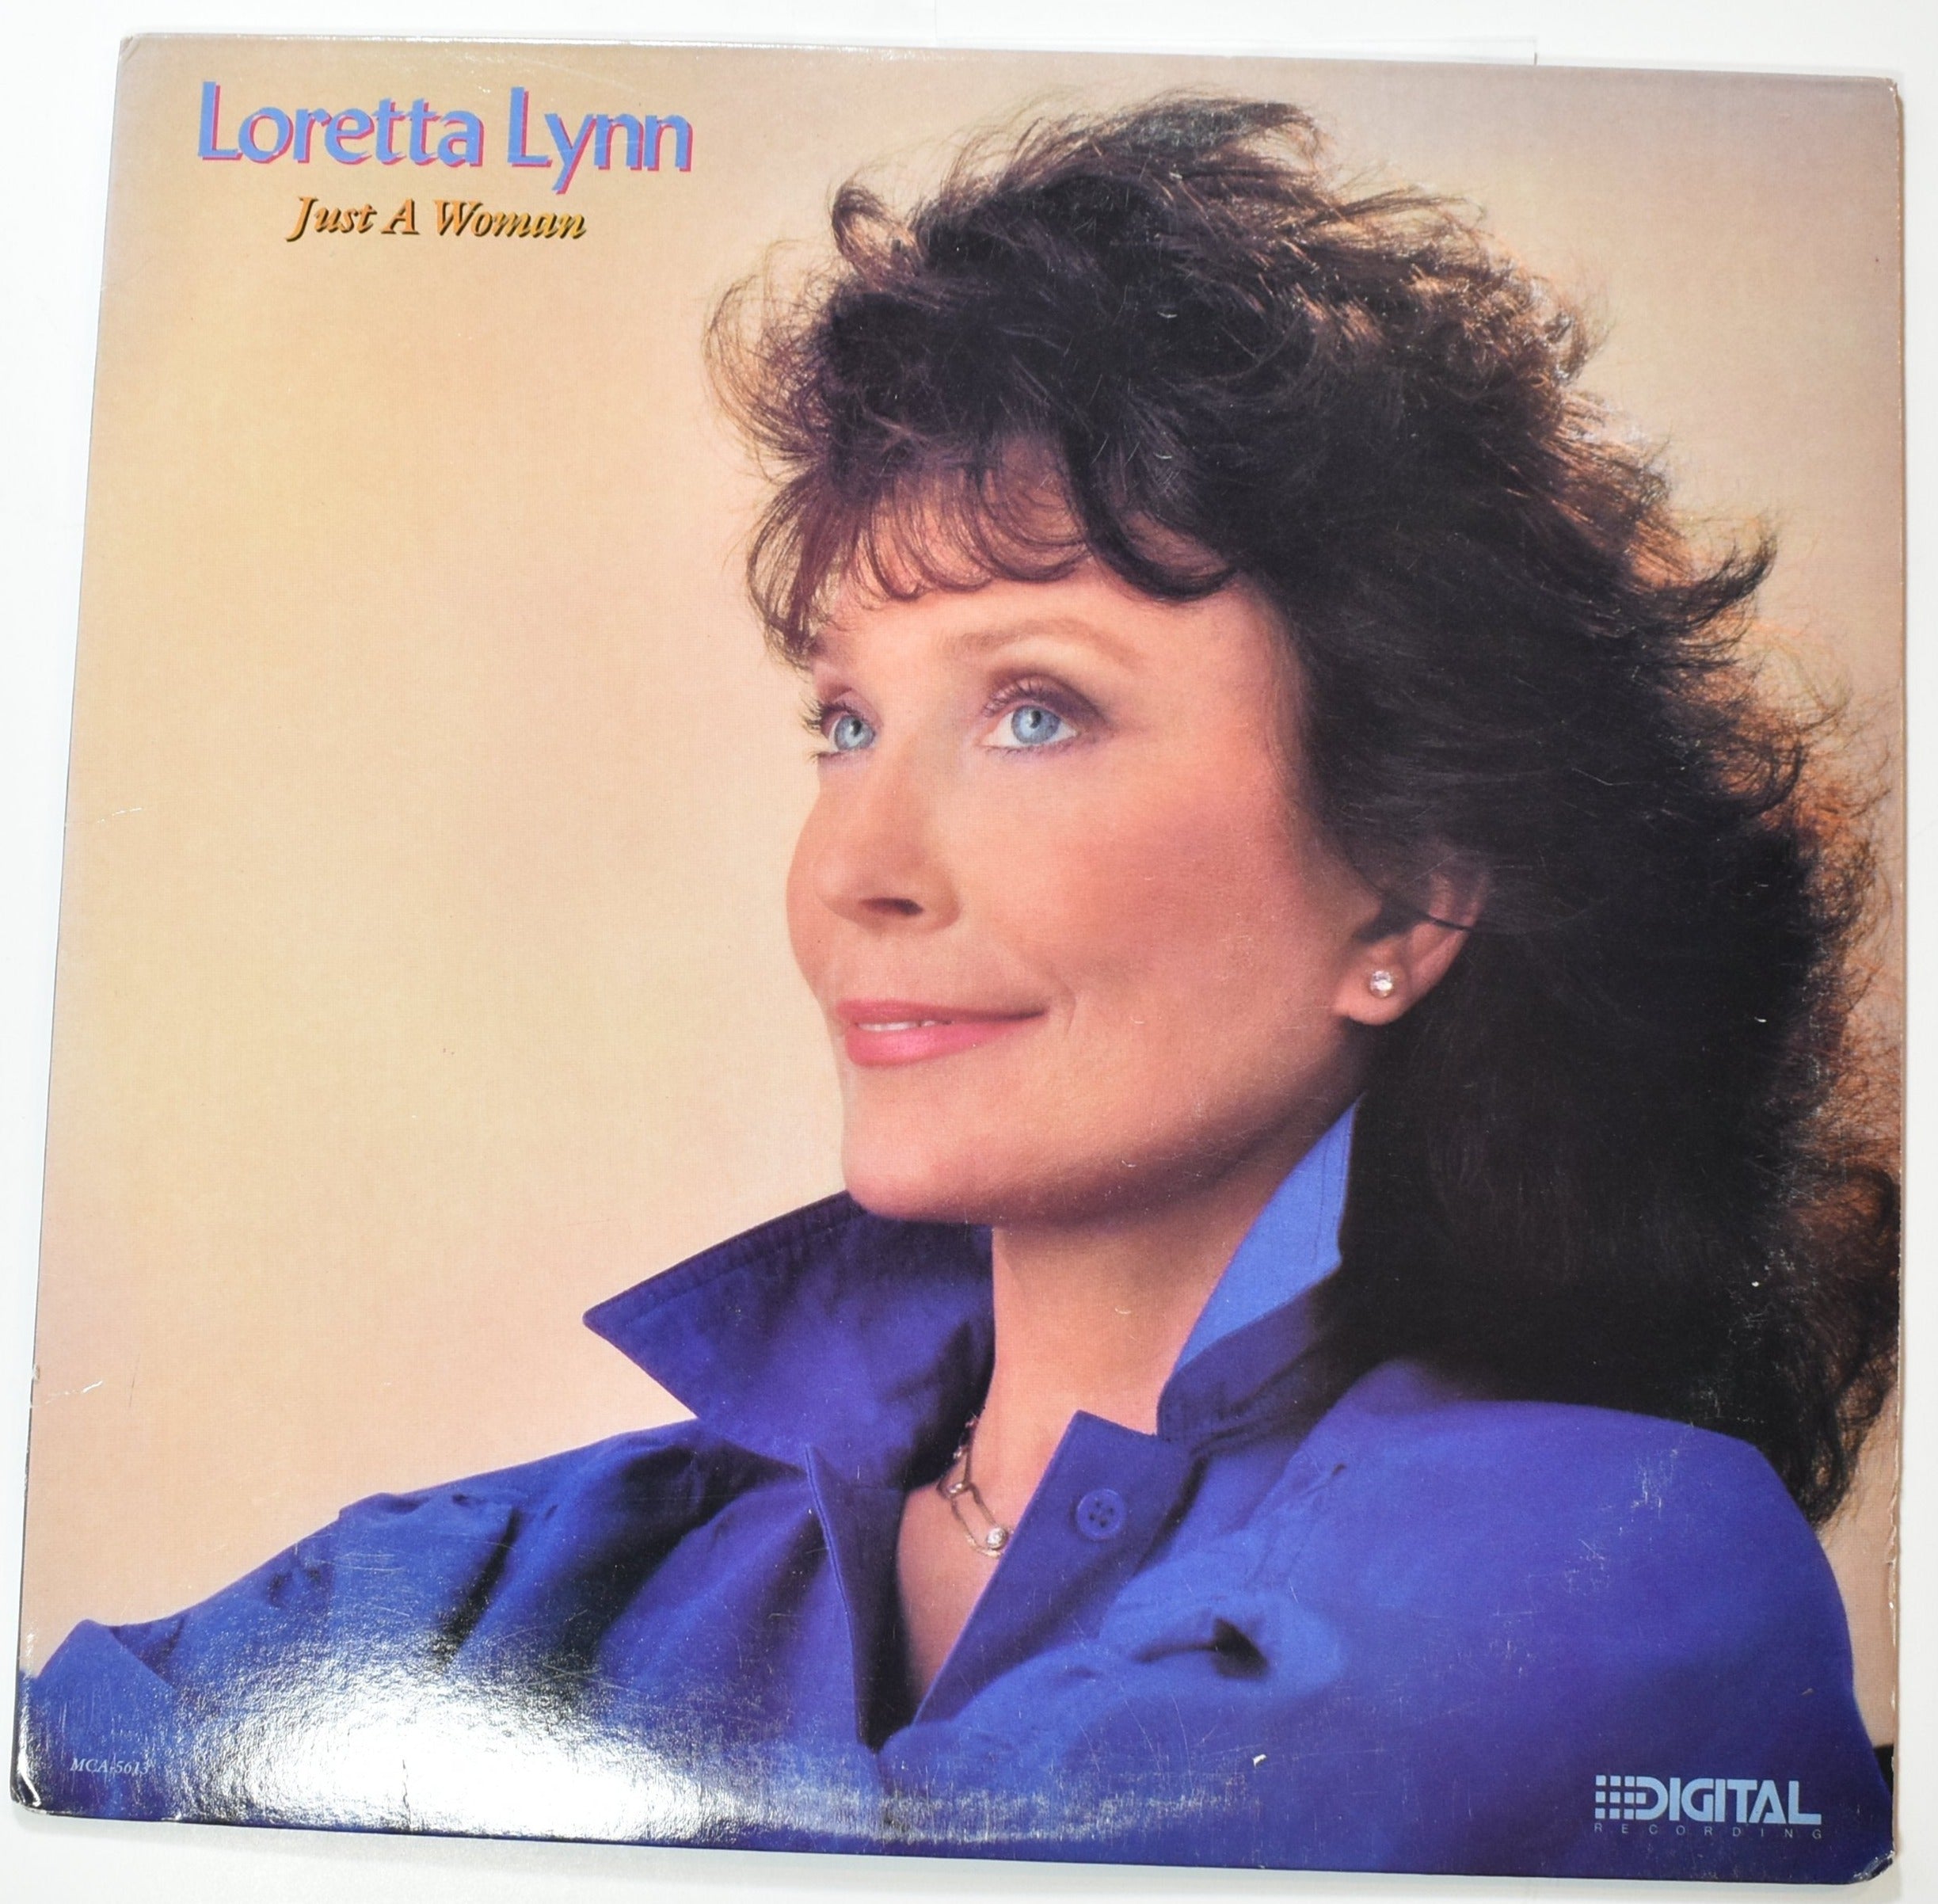 Vinyl Record Loretta Lynn Just a woman used vinyl